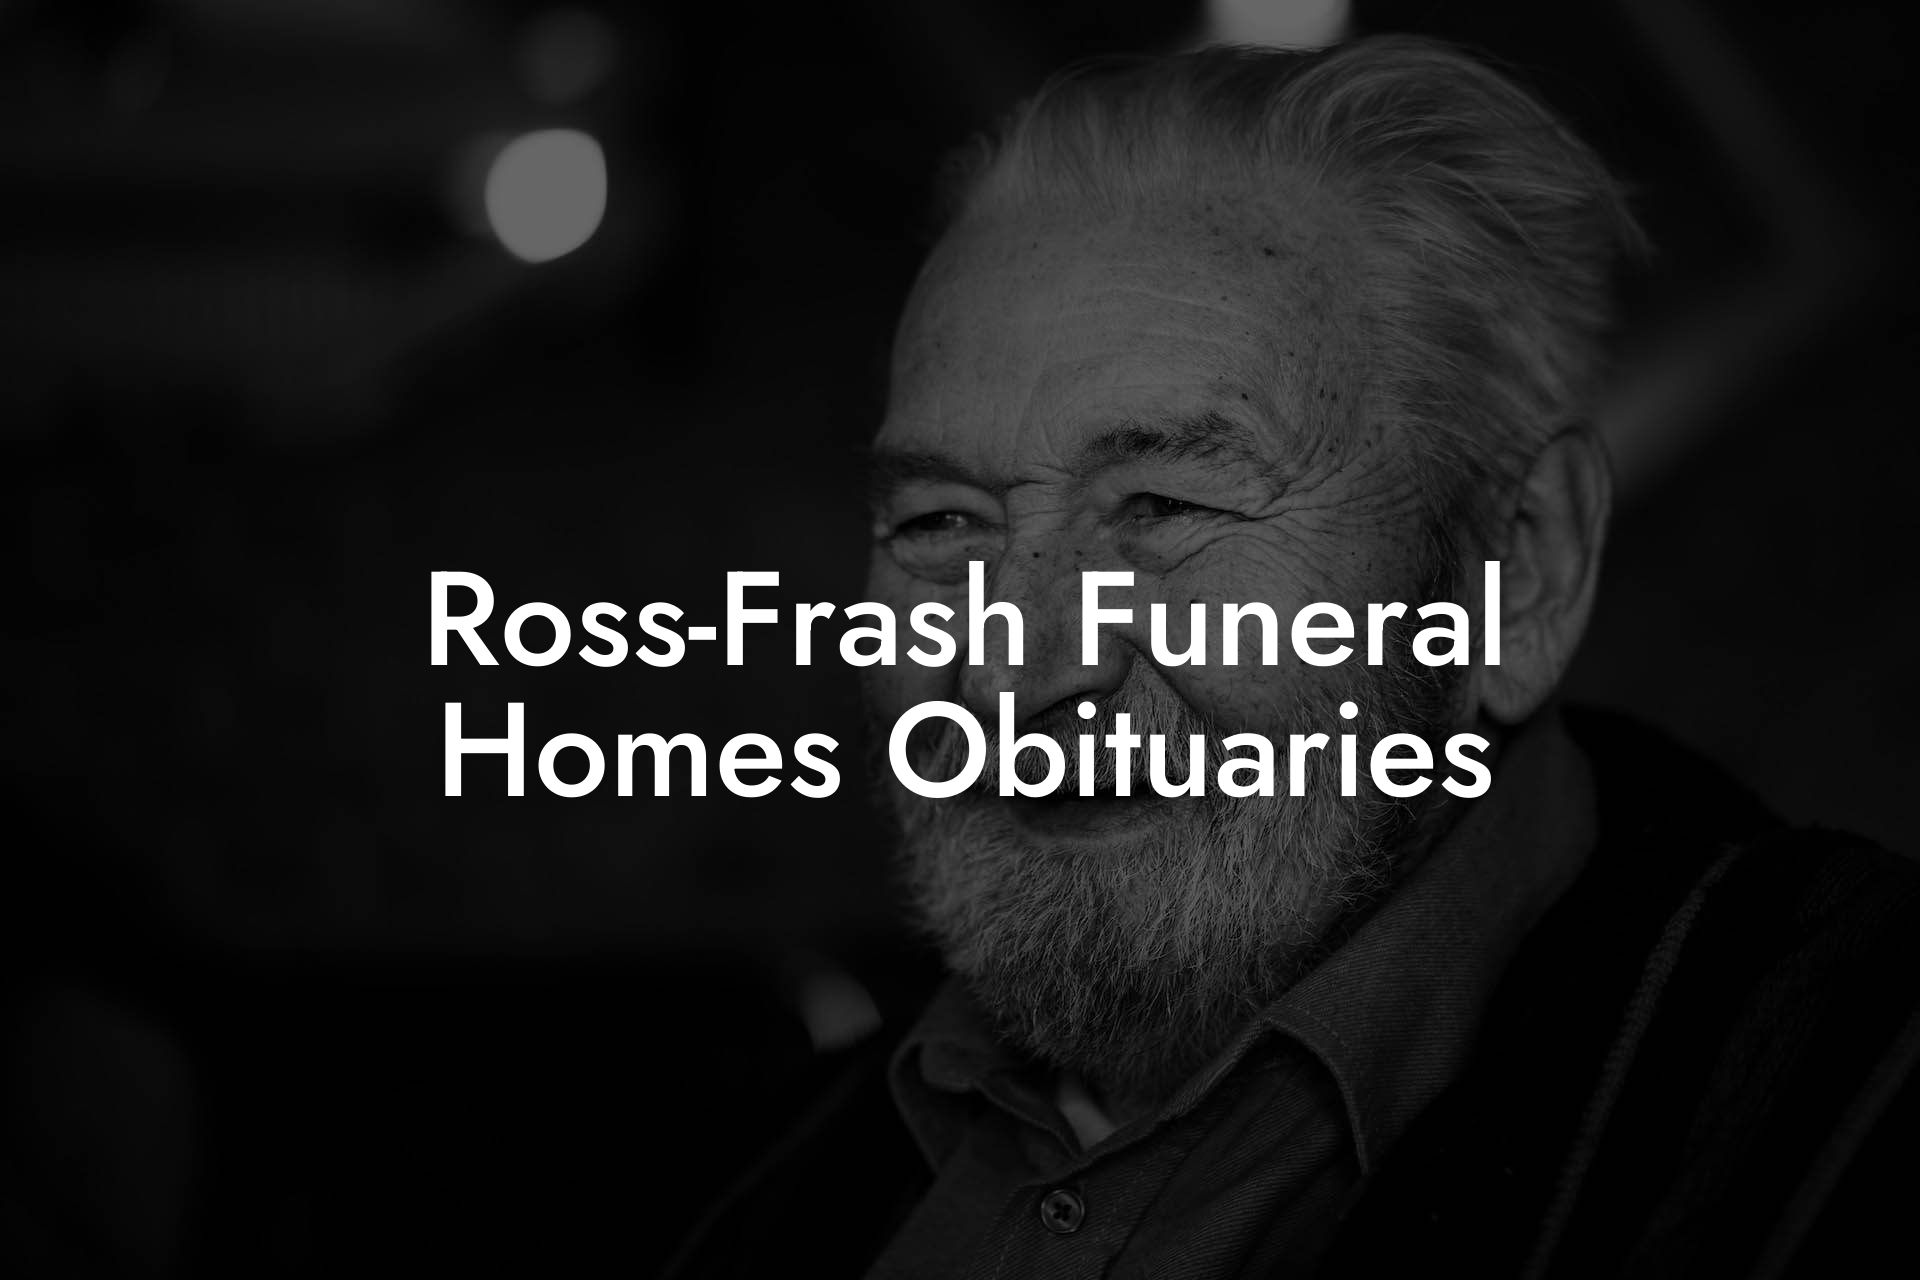 Ross-Frash Funeral Homes Obituaries